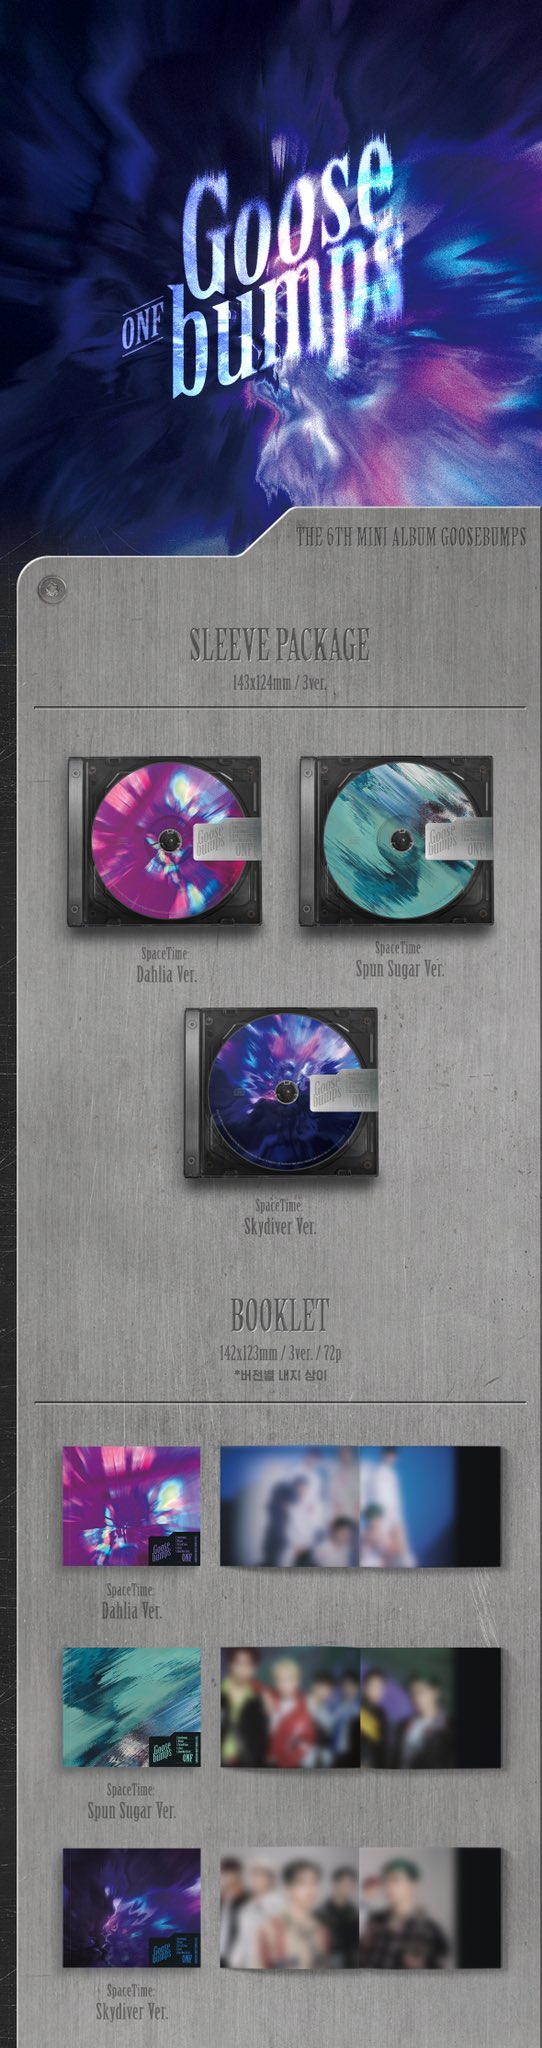 ONF 'Goosebumps' album details